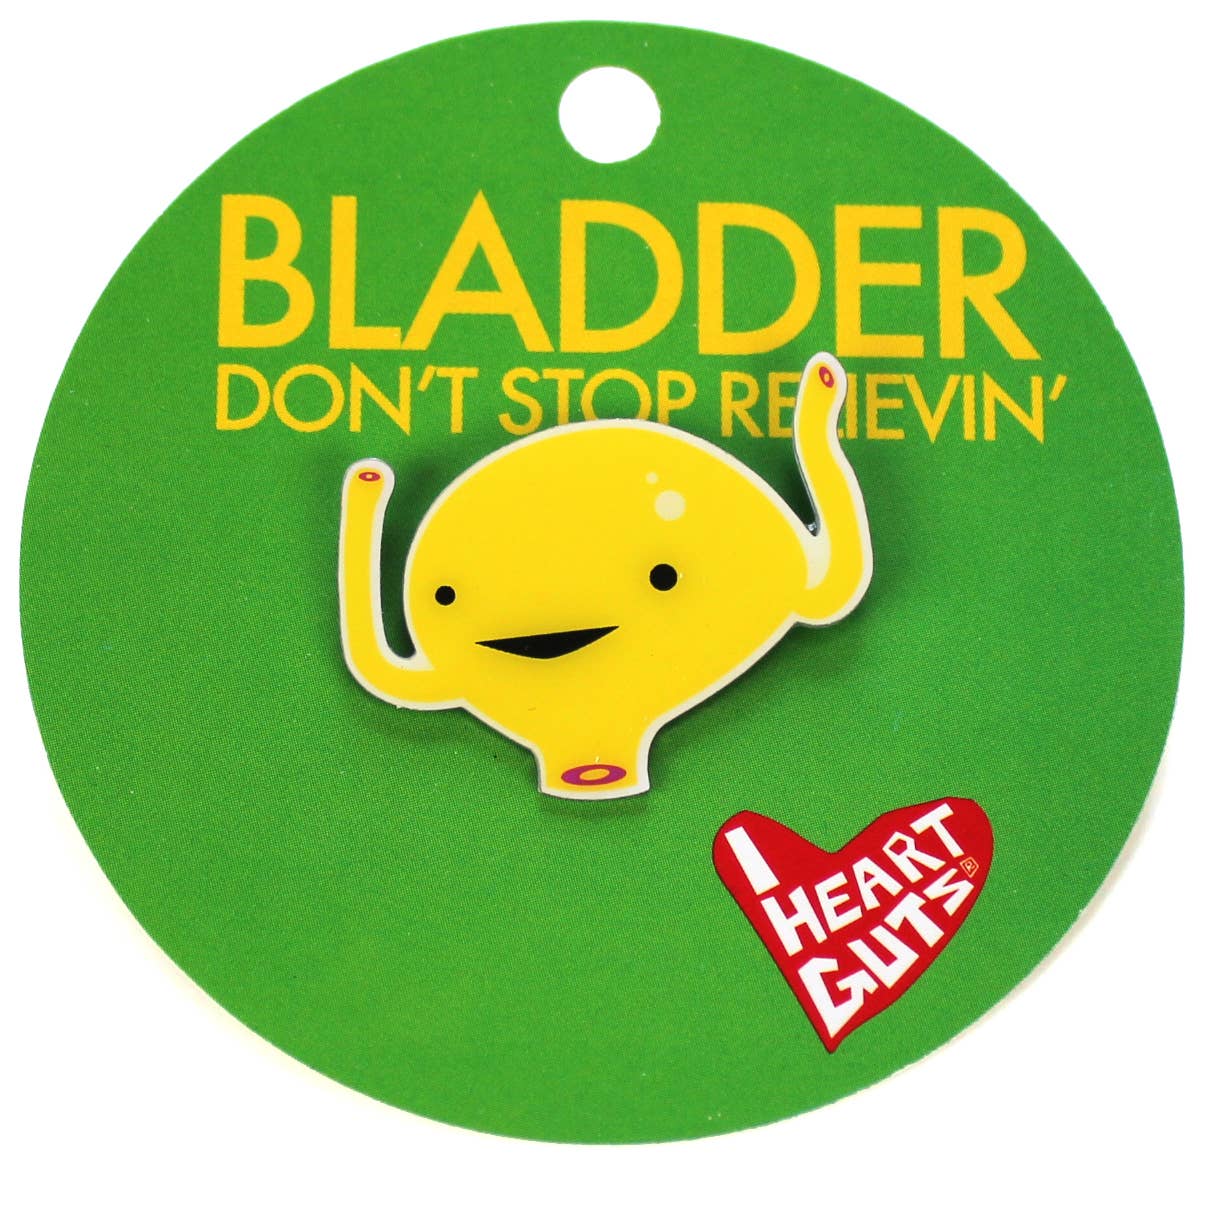 Bladder Lapel Pin